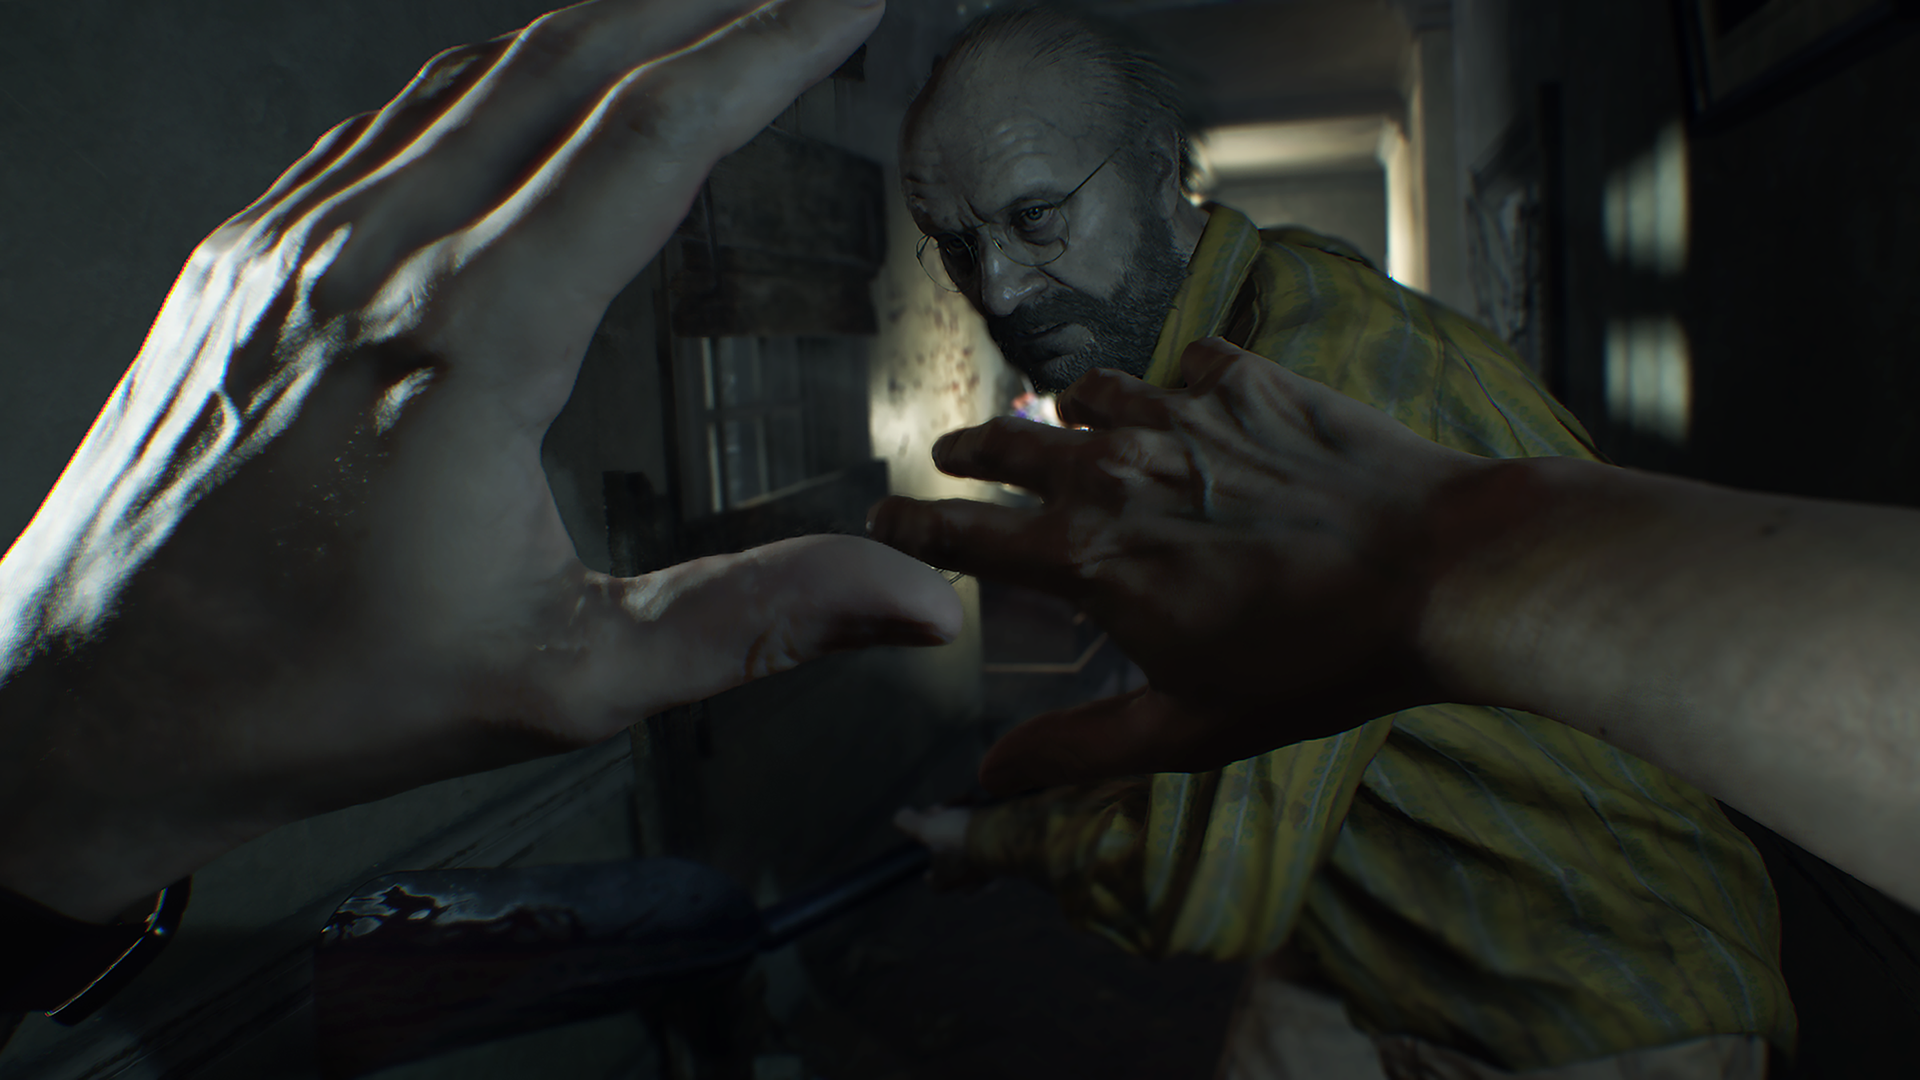  Resident Evil 7 Demo Update “Twilight Version”, New Trailer, CERO Z Version Confirmed